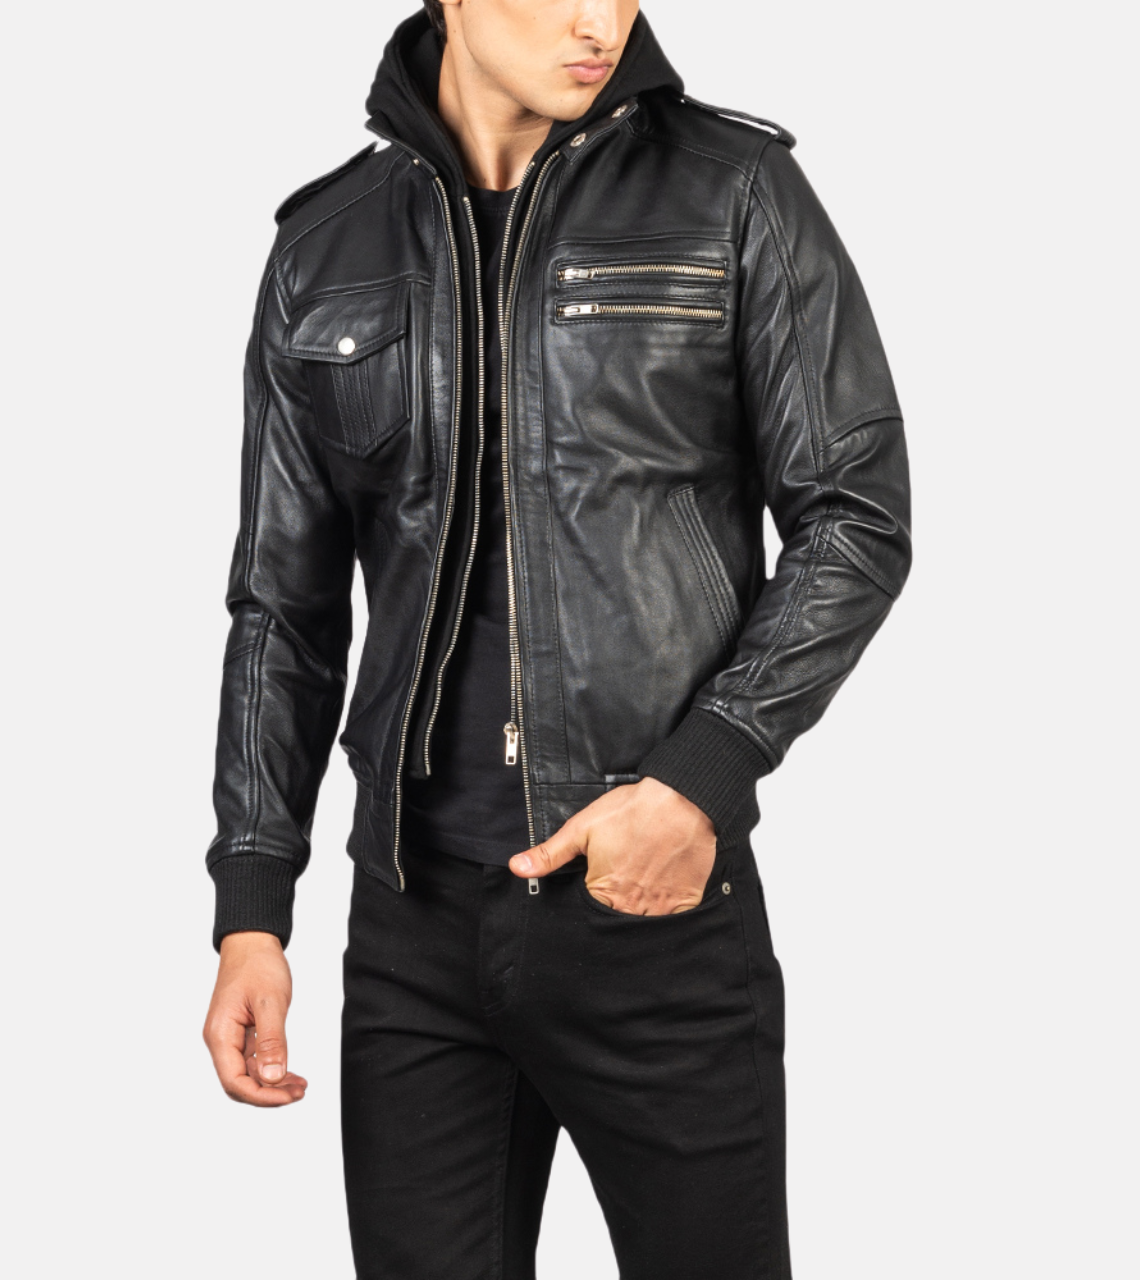 Mitico Black Hooded Men's Leather Bomber Jacket